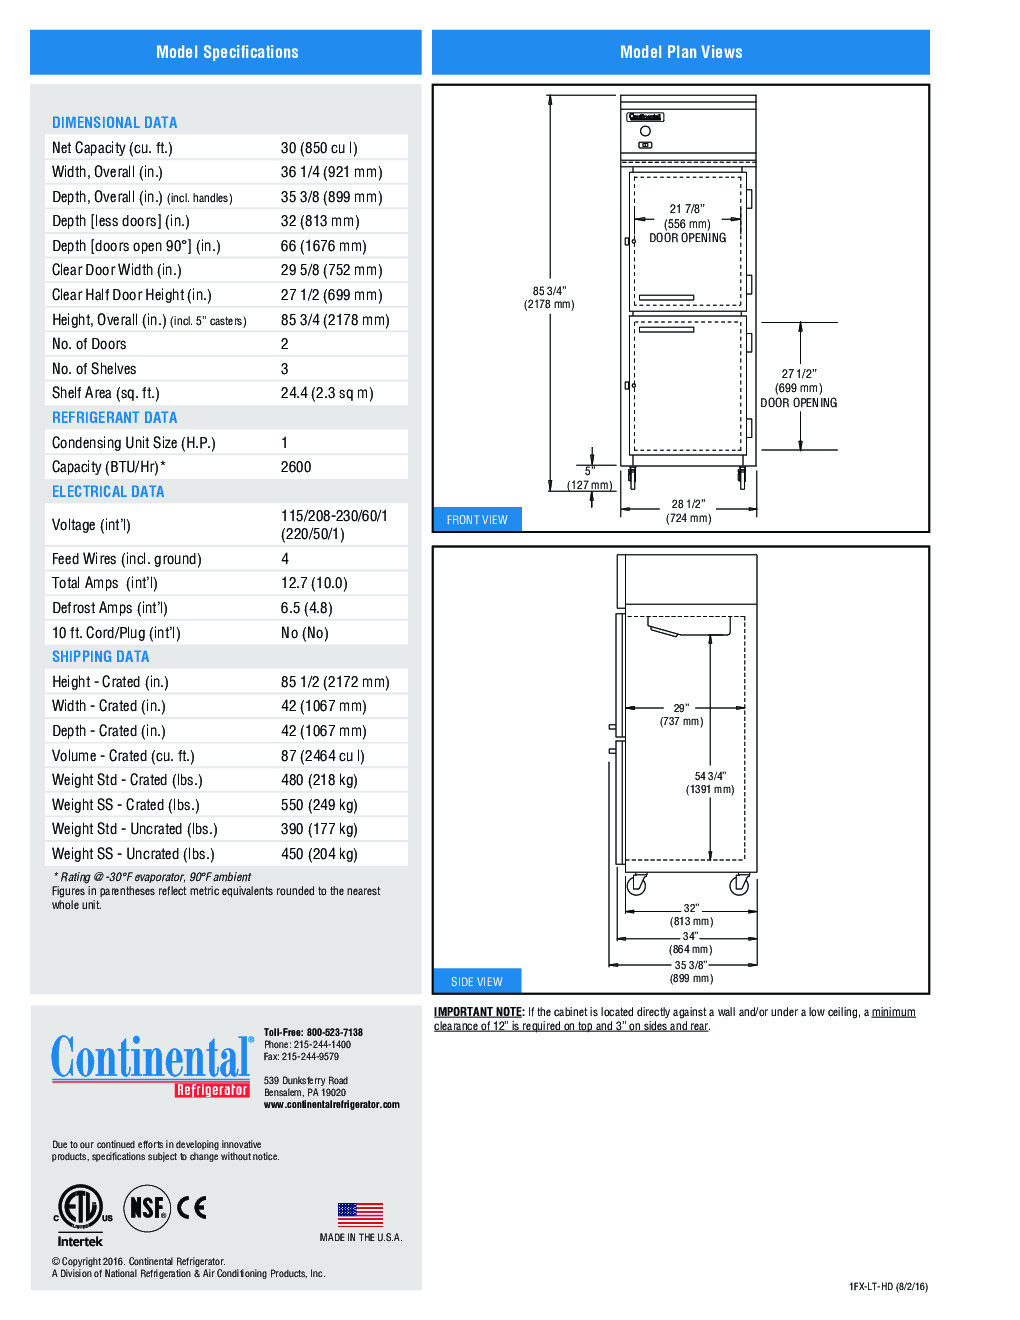 Continental Refrigerator 1FX-LT-HD Reach-In Low Temperature Freezer